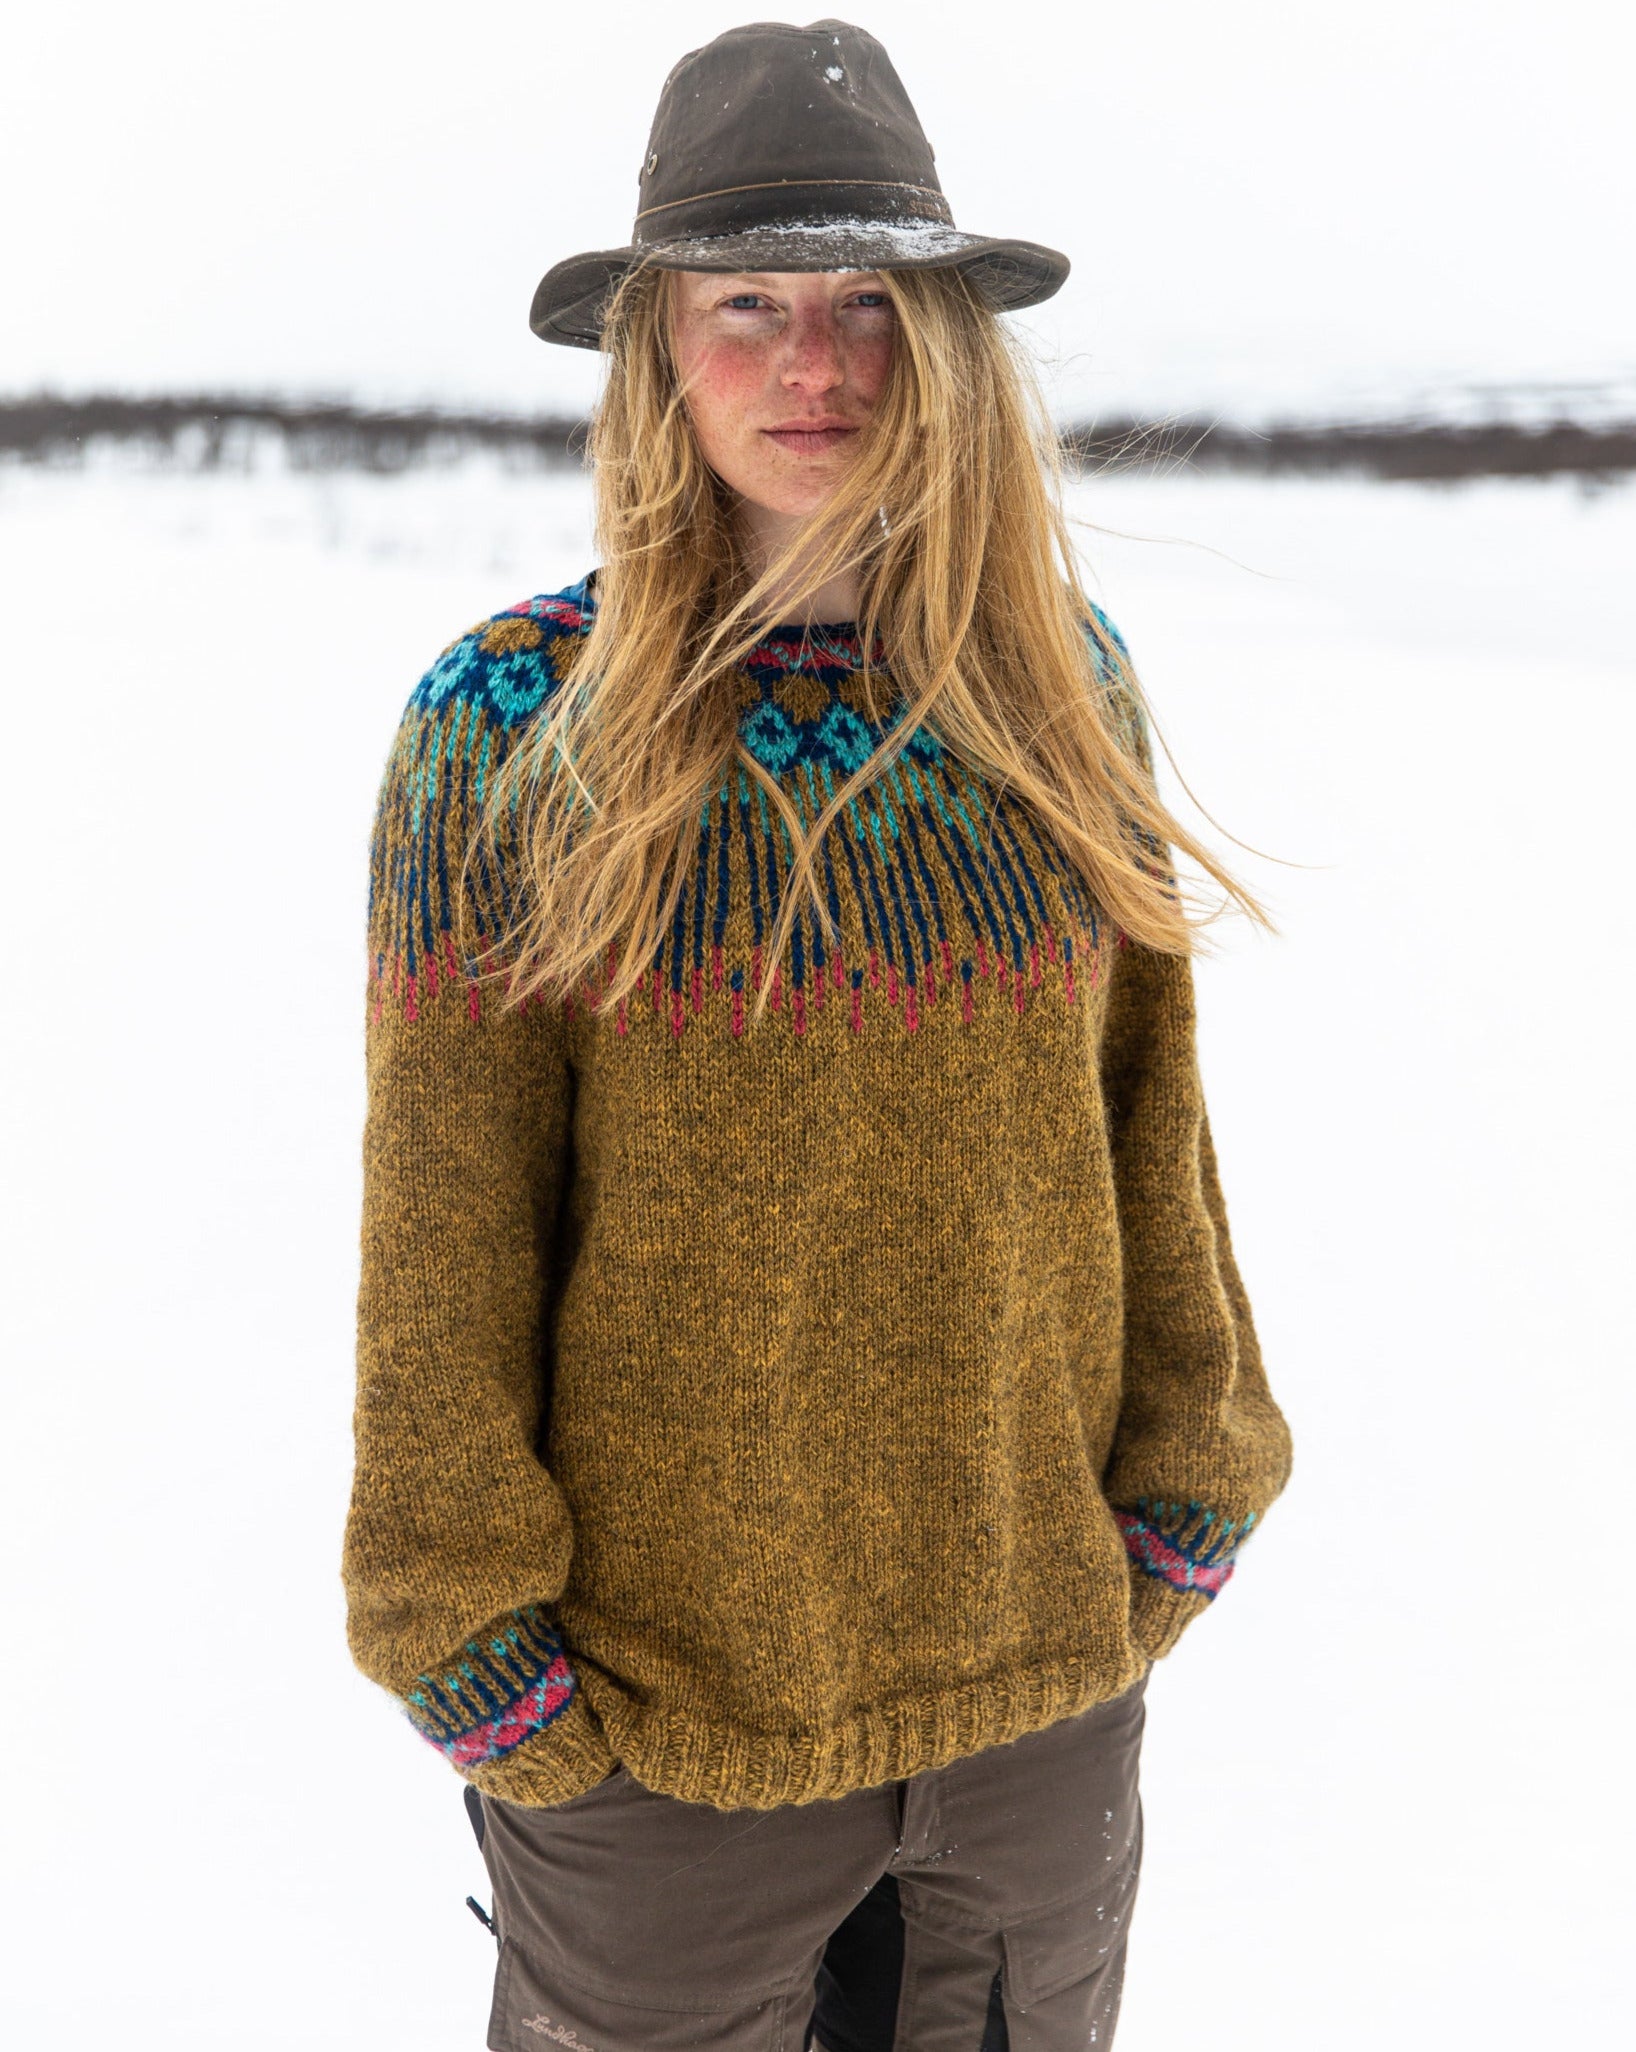 Hopi - Wilderness sweaters 2 - Linka Neumann